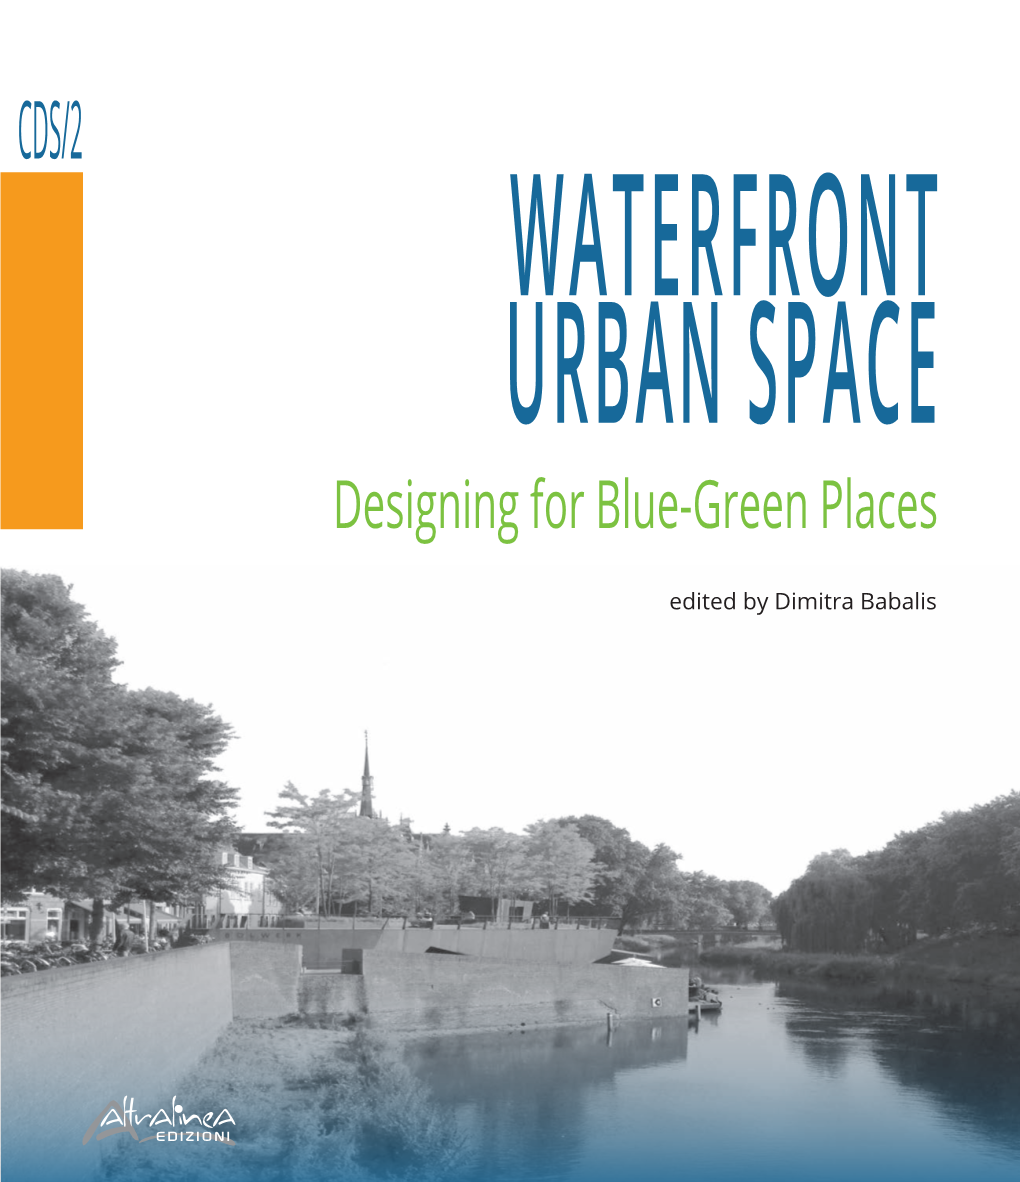 Waterfront Urban Space